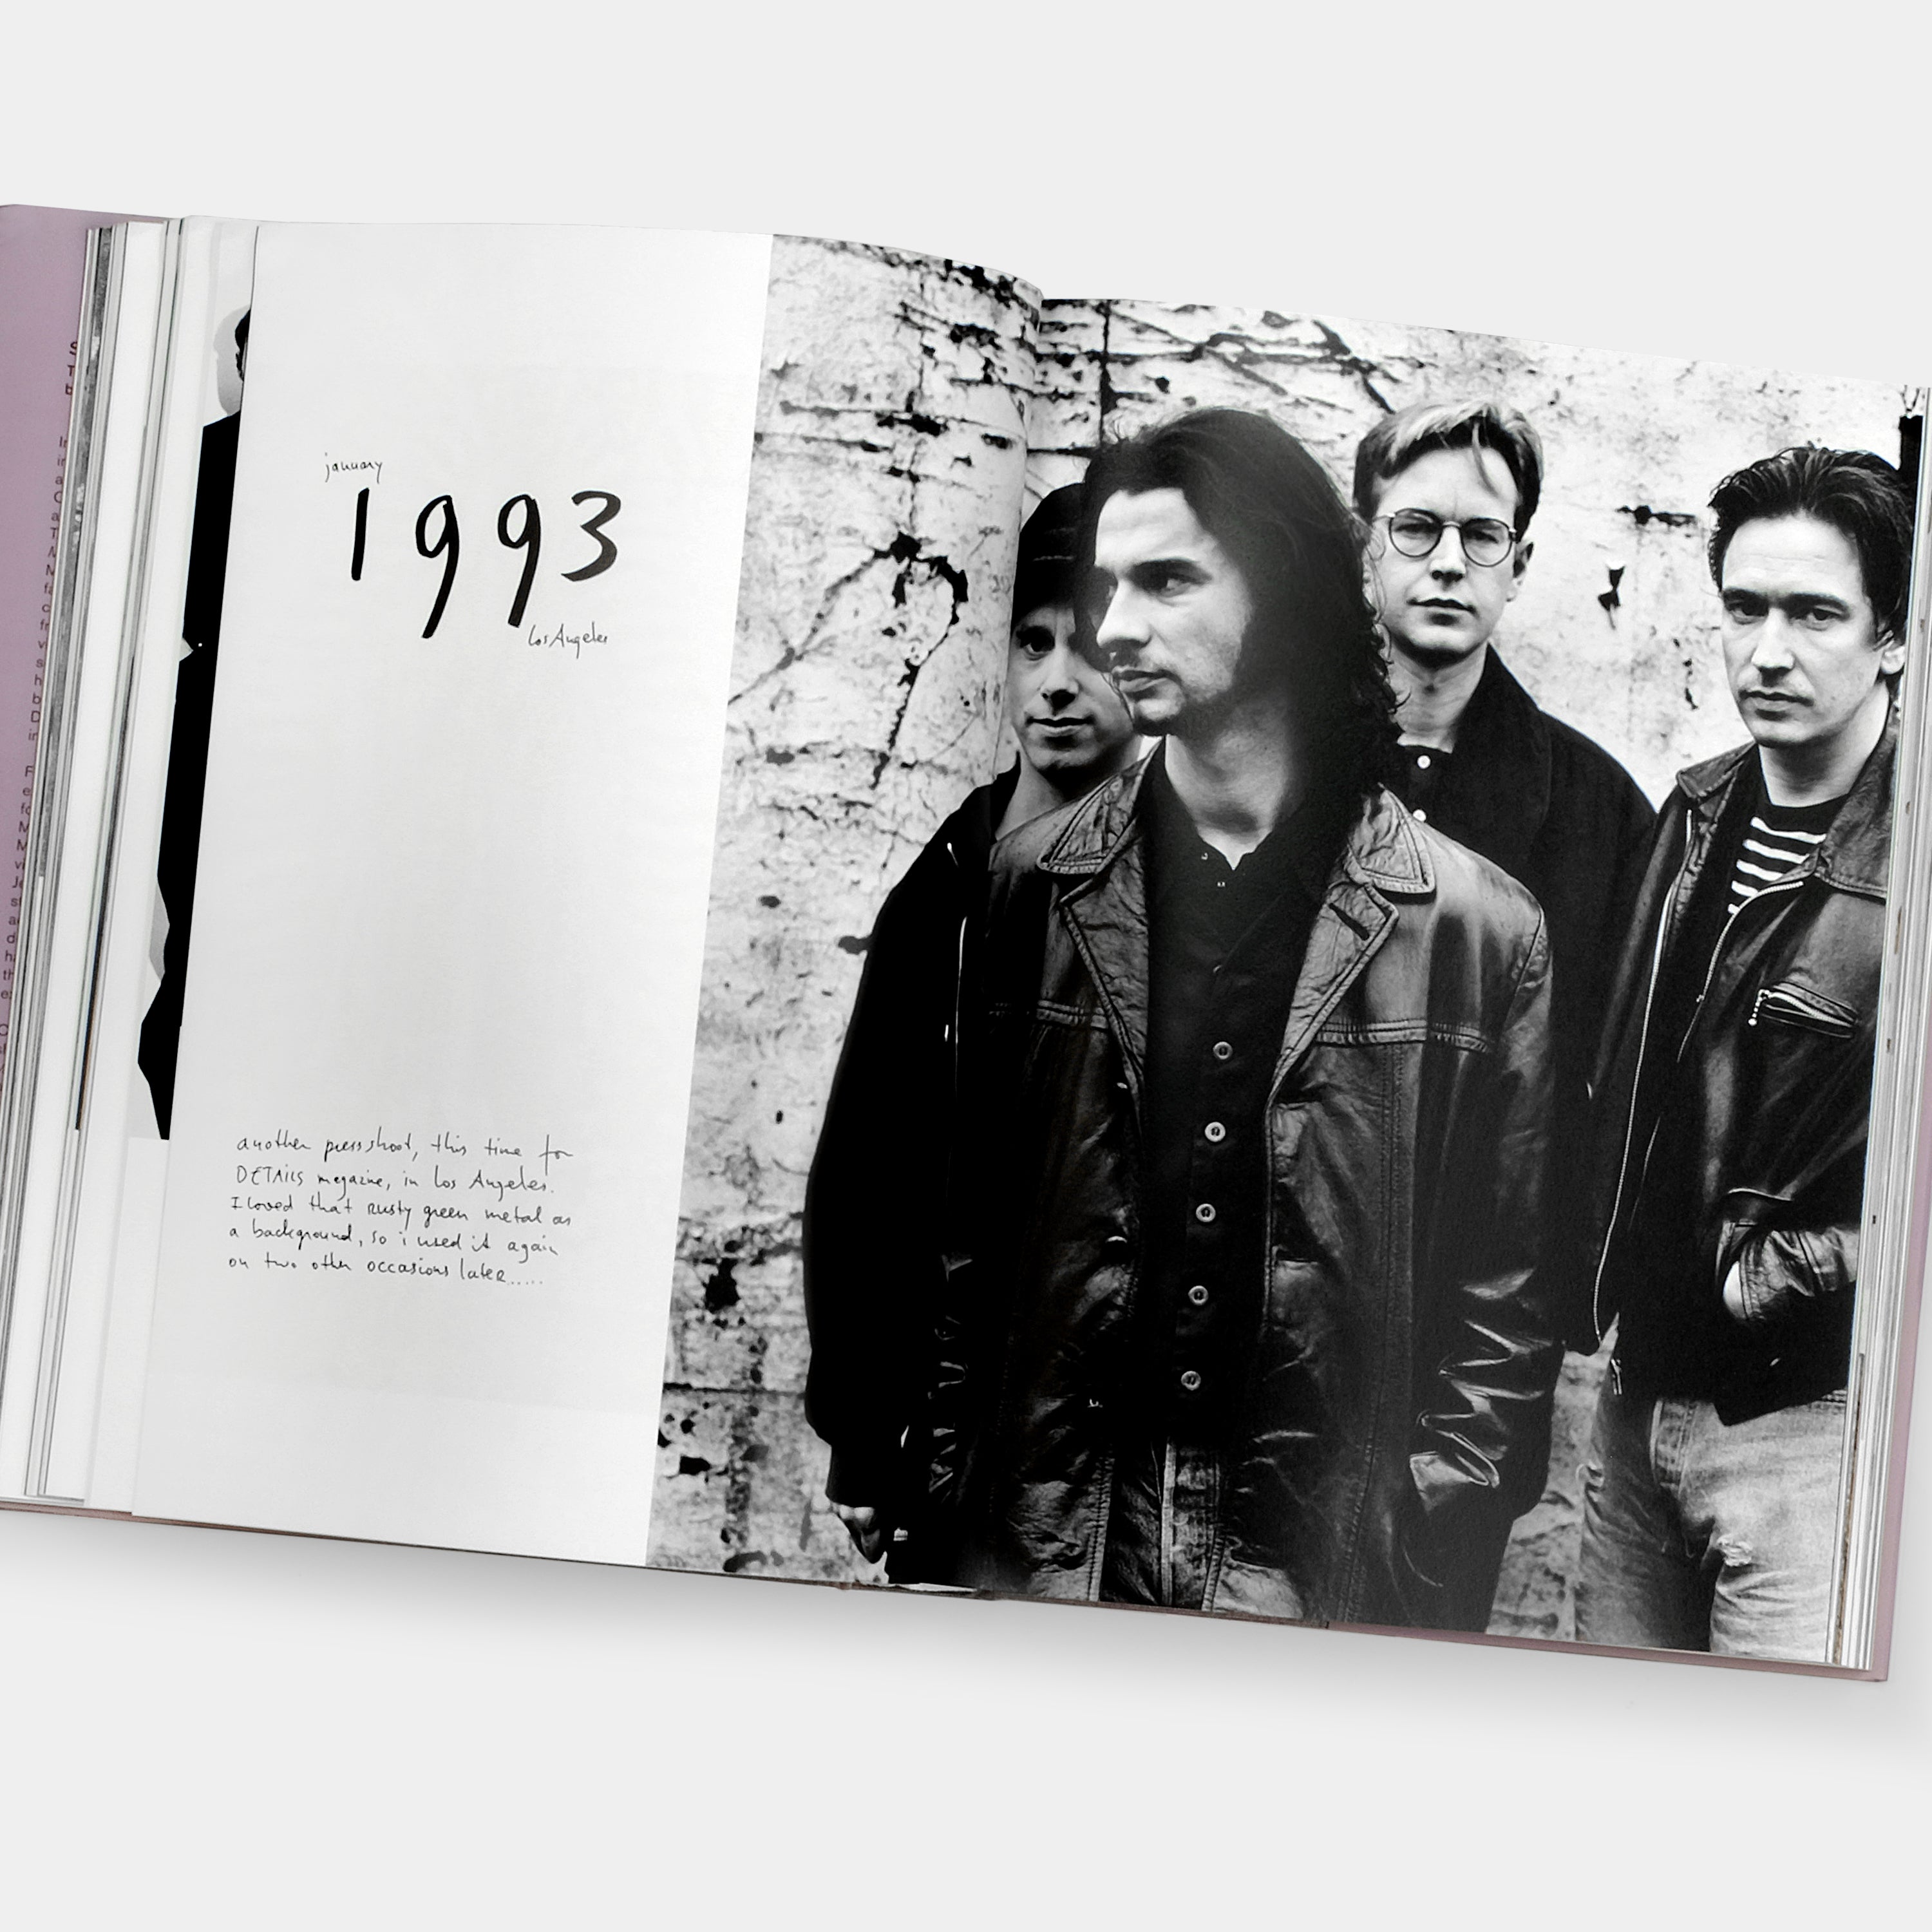 Depeche Mode by Anton Corbijn XL Taschen Book